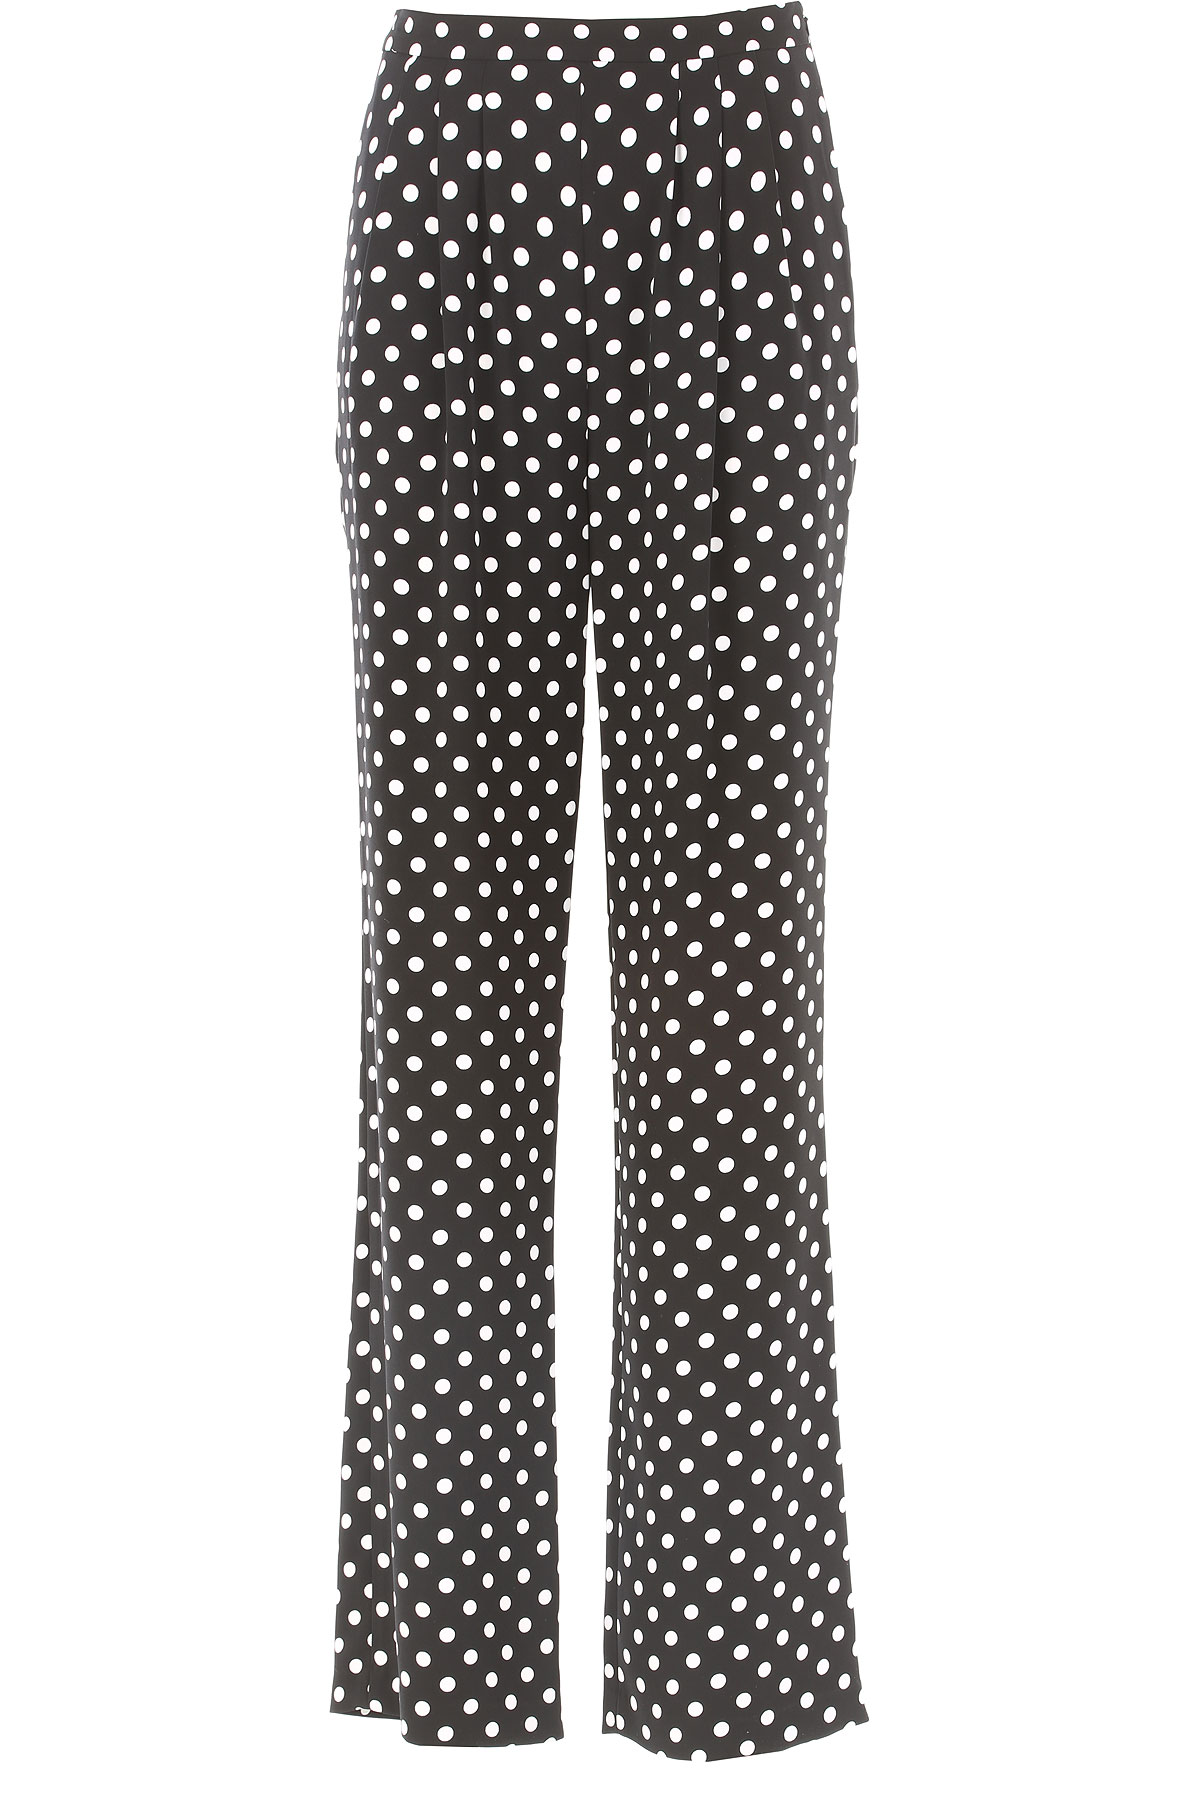 Michael Kors Pantalon Femme, Noir, Polyester, 2017, 38 40